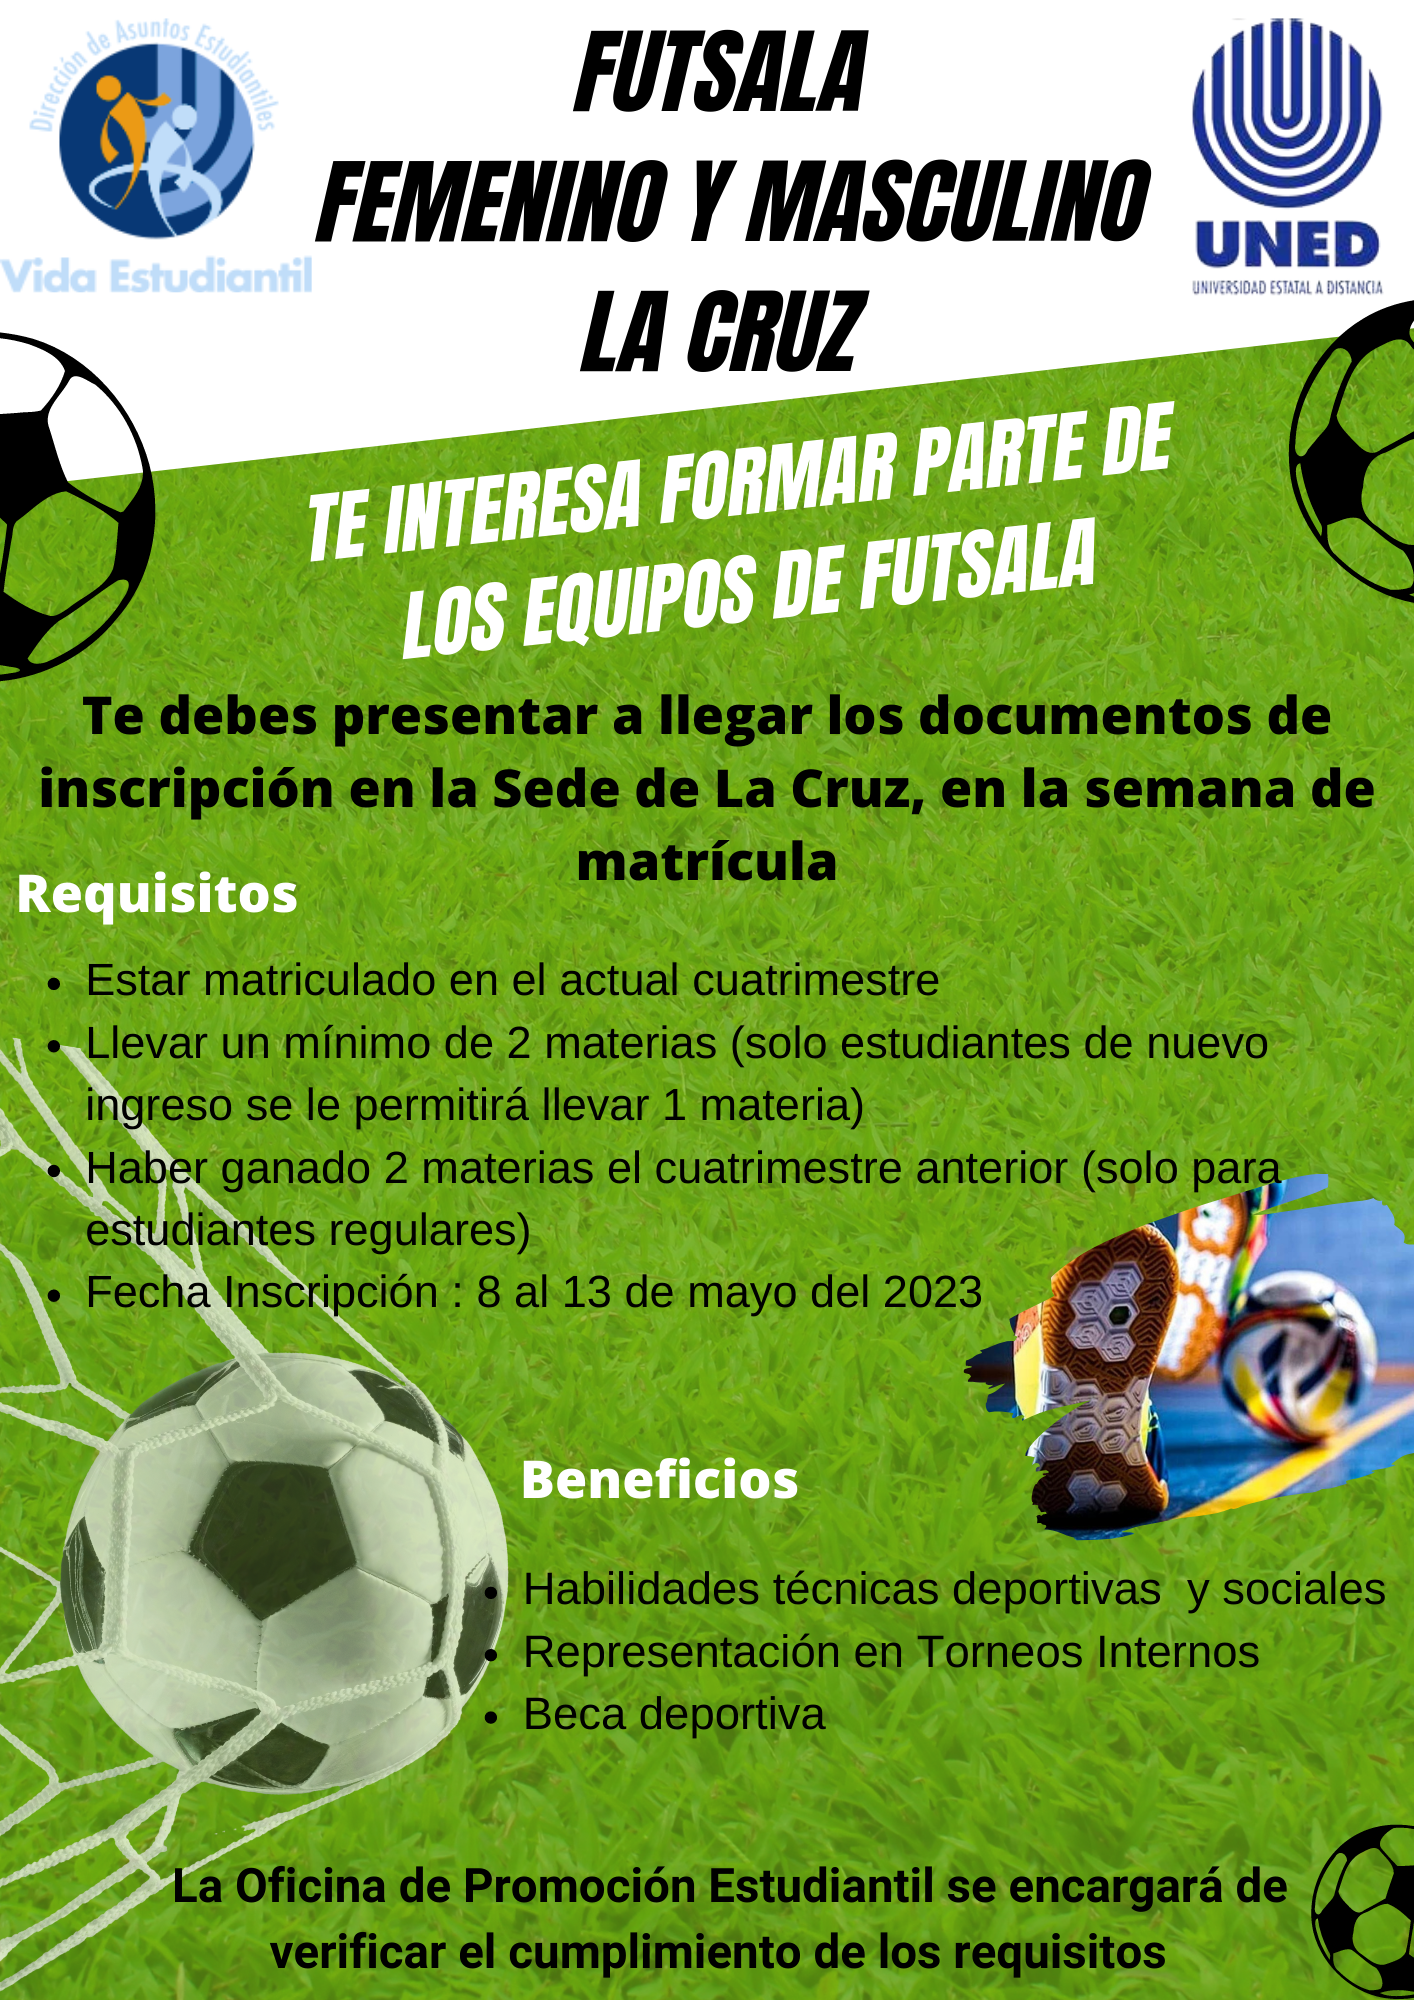 Futsala Femenino y Masculino La Cruz